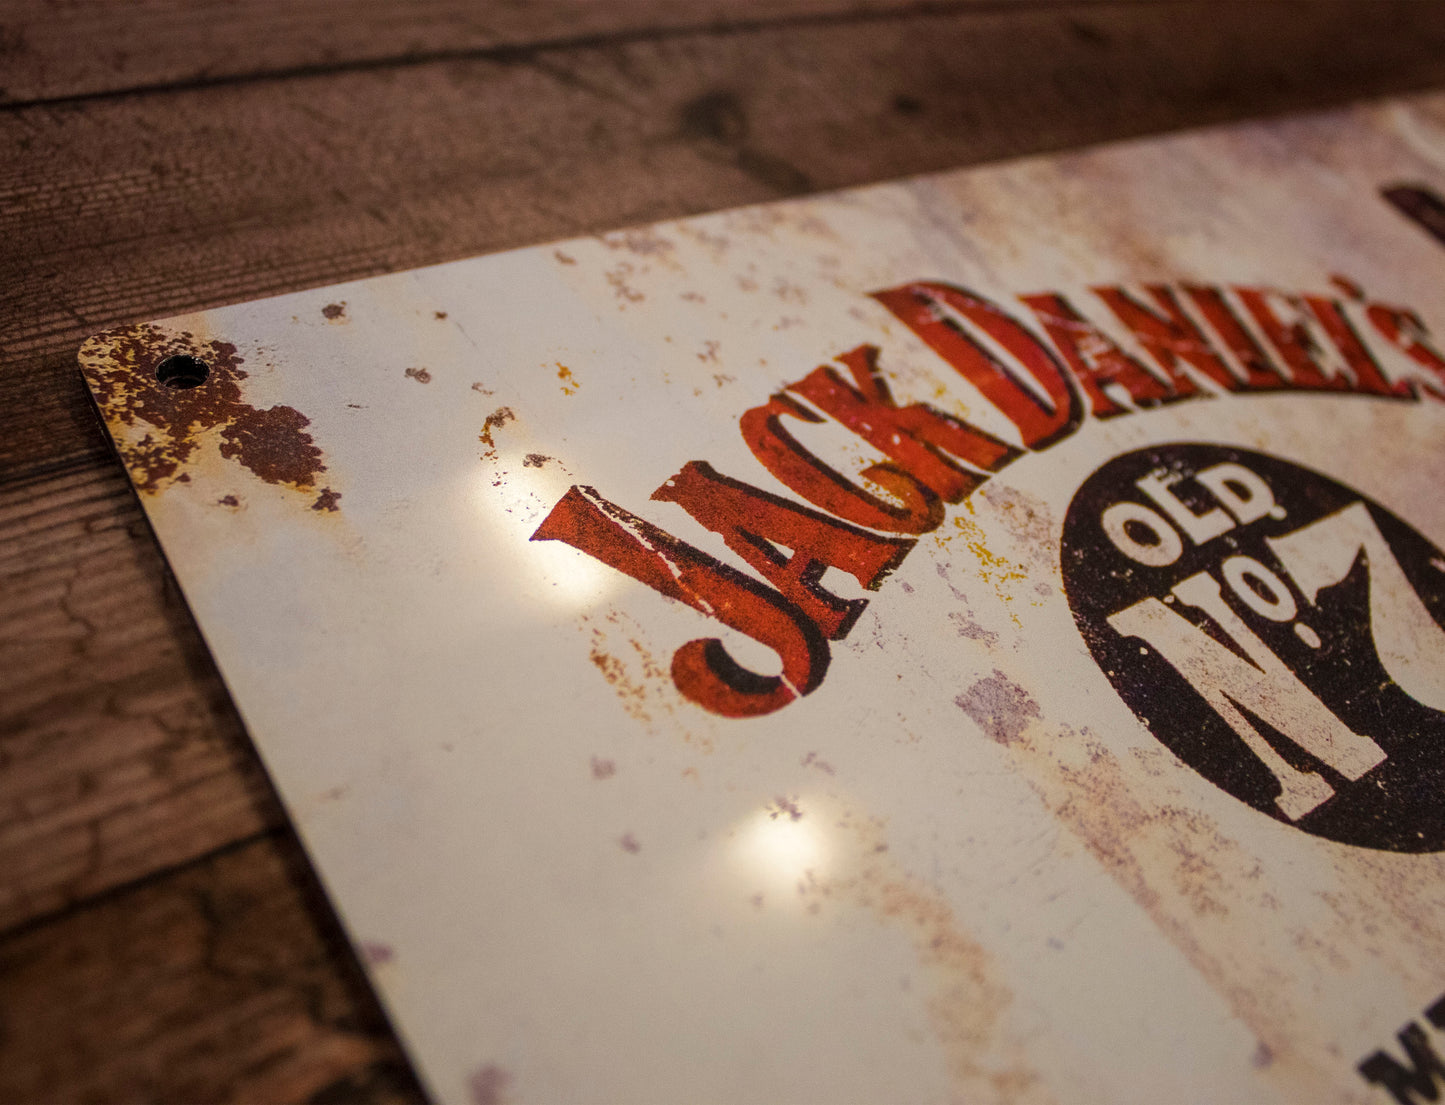 Jack Daniels Metal Sign